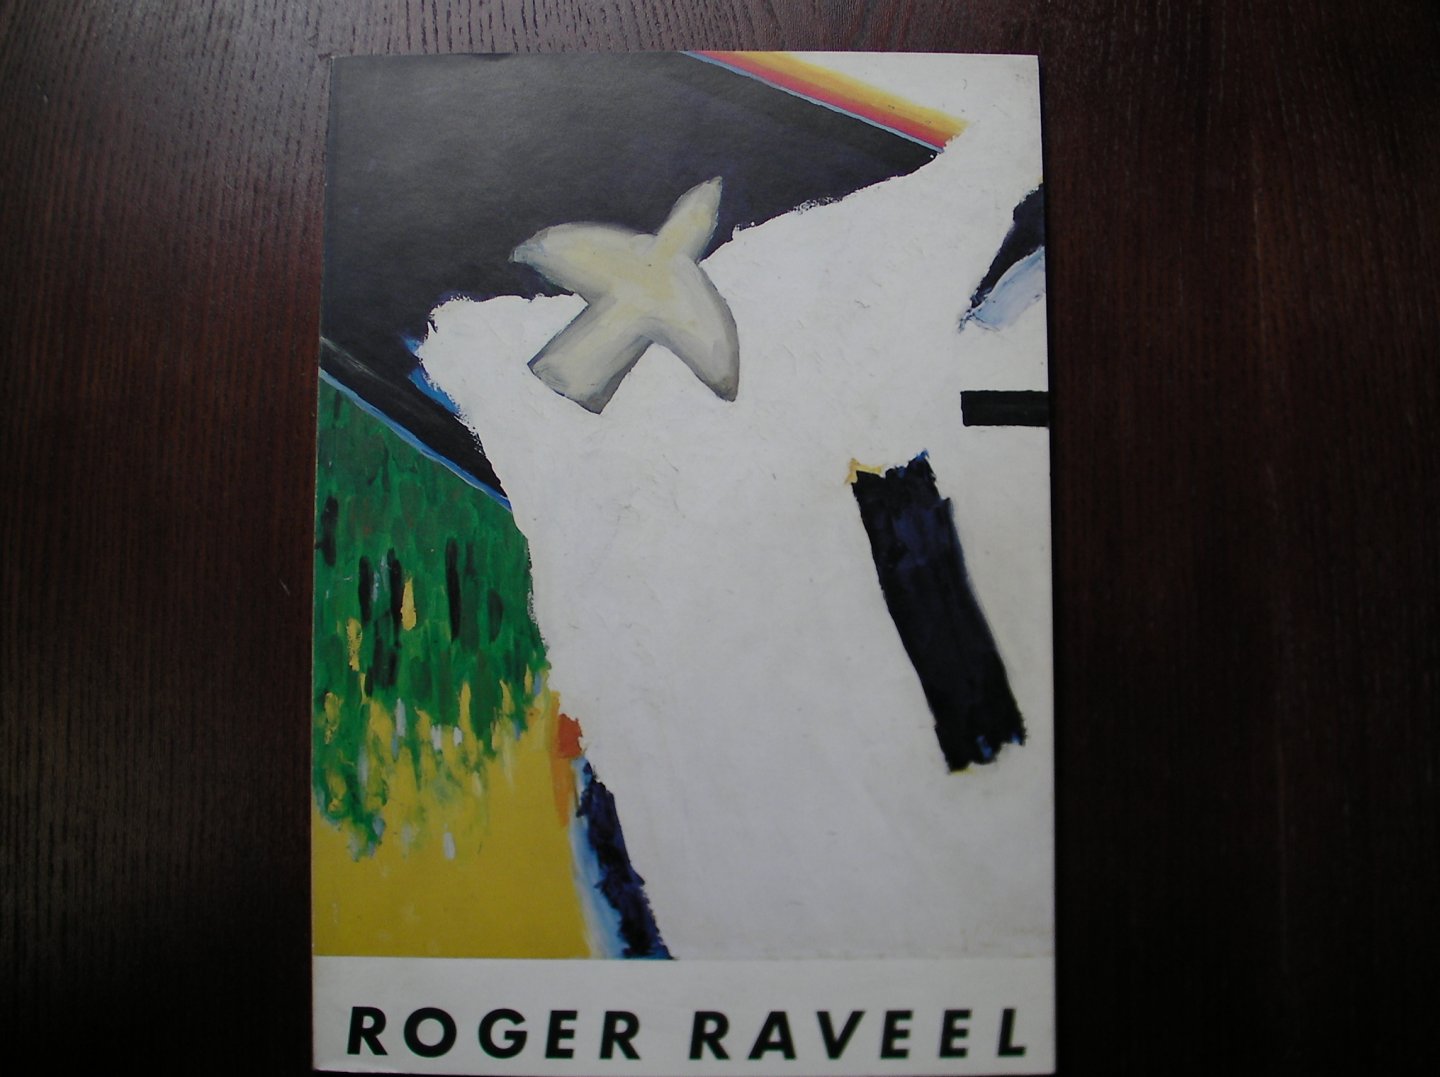  - Roger Raveel